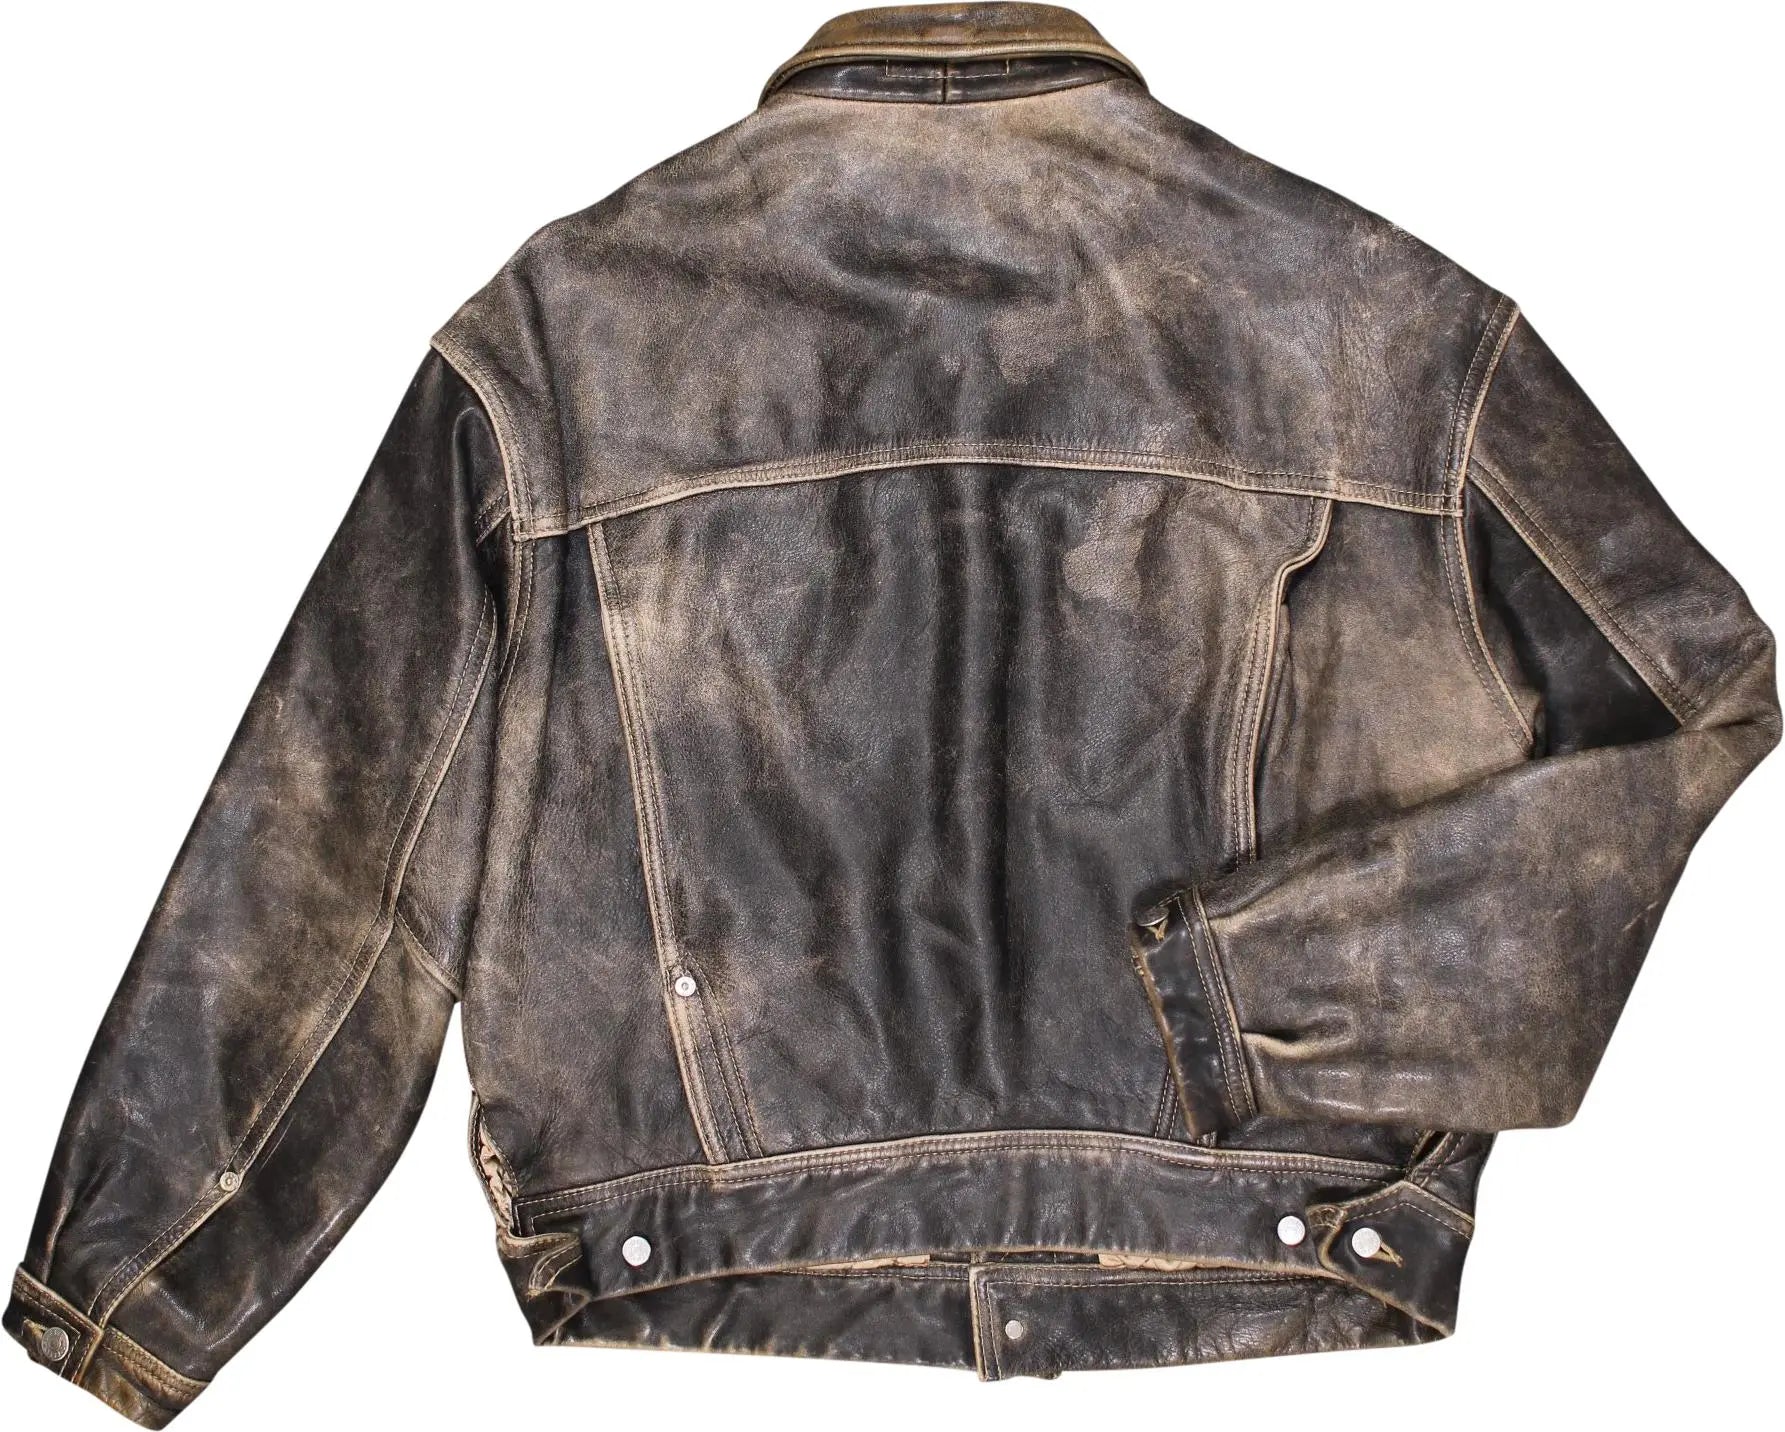 Diesel - Vintage Leather Jacket by Diesel- ThriftTale.com - Vintage and second handclothing